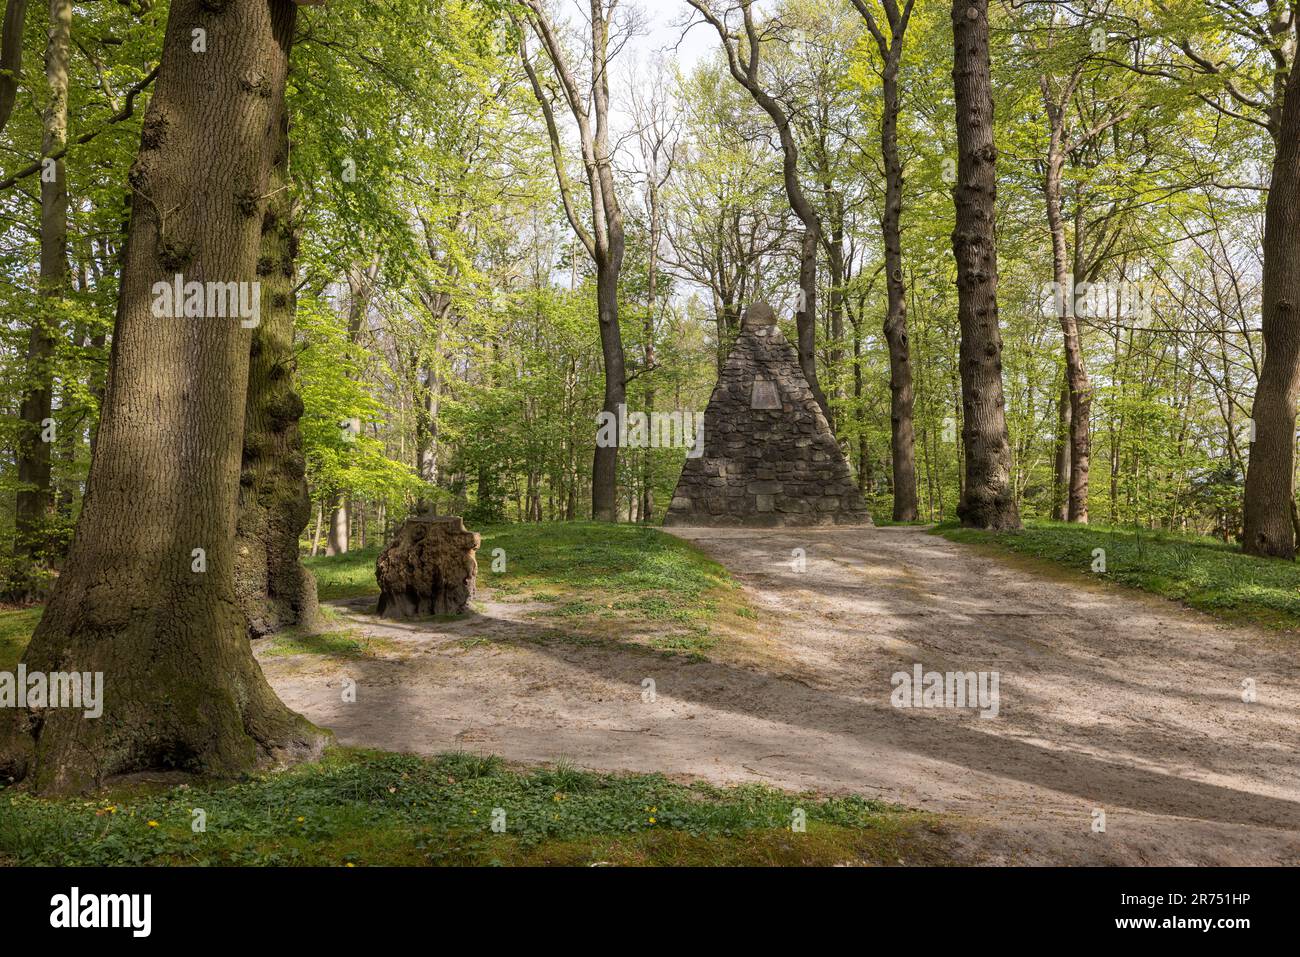 Stone pyramid, monument Upstalsboom 'Frisian Freedom', district Rahe, Aurich, East Frisia, Stock Photo